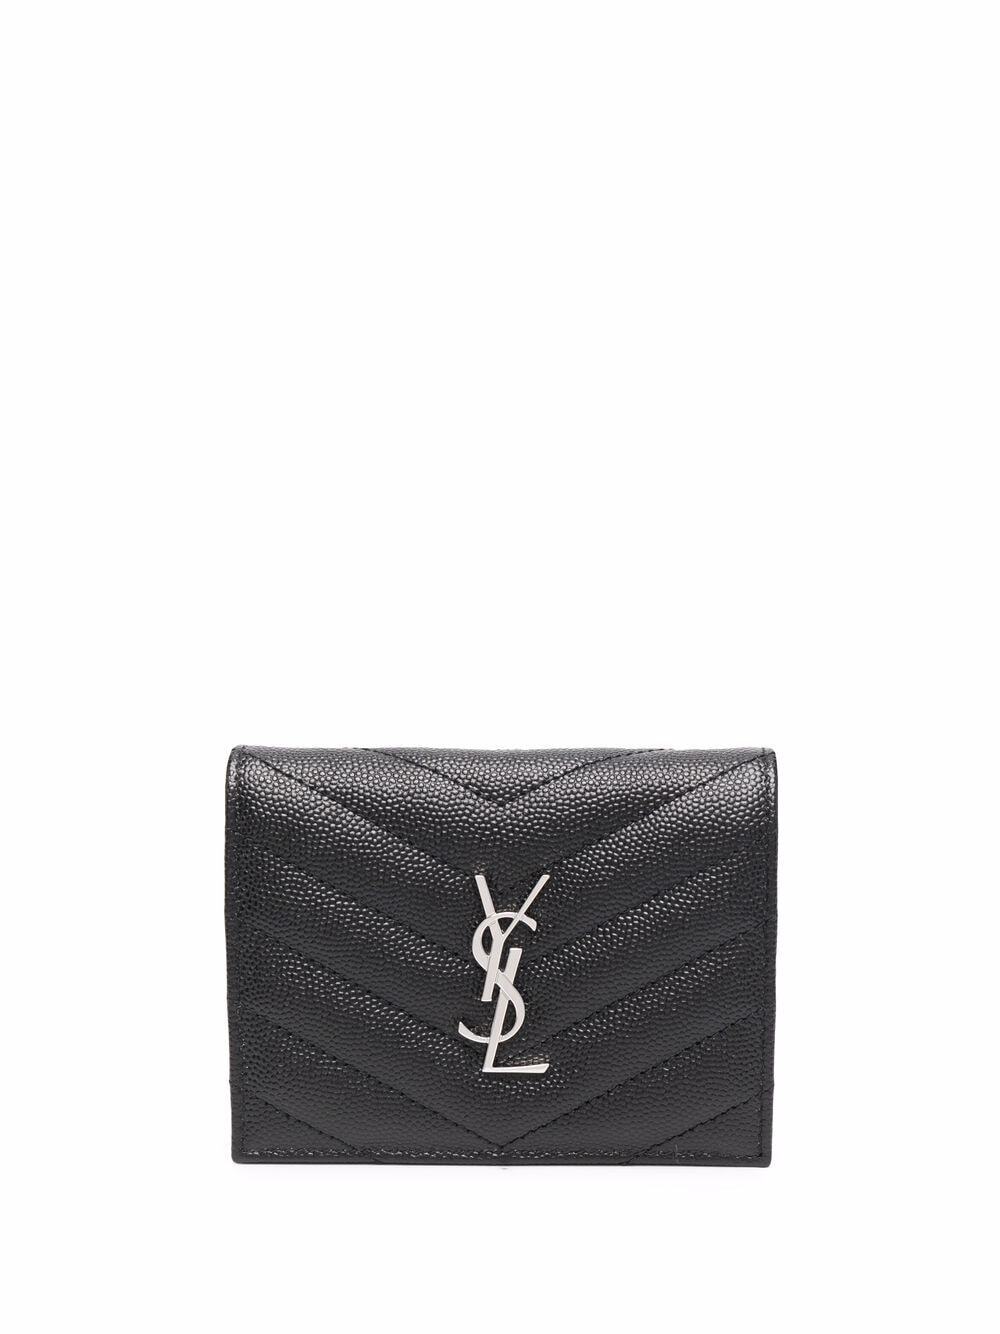 Saint Laurent quilted leather wallet - Black